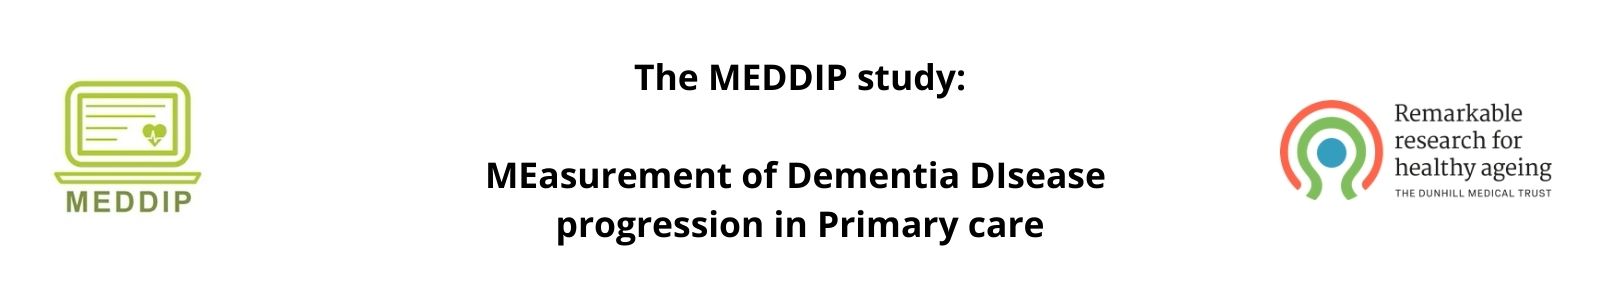 MEDDIP study